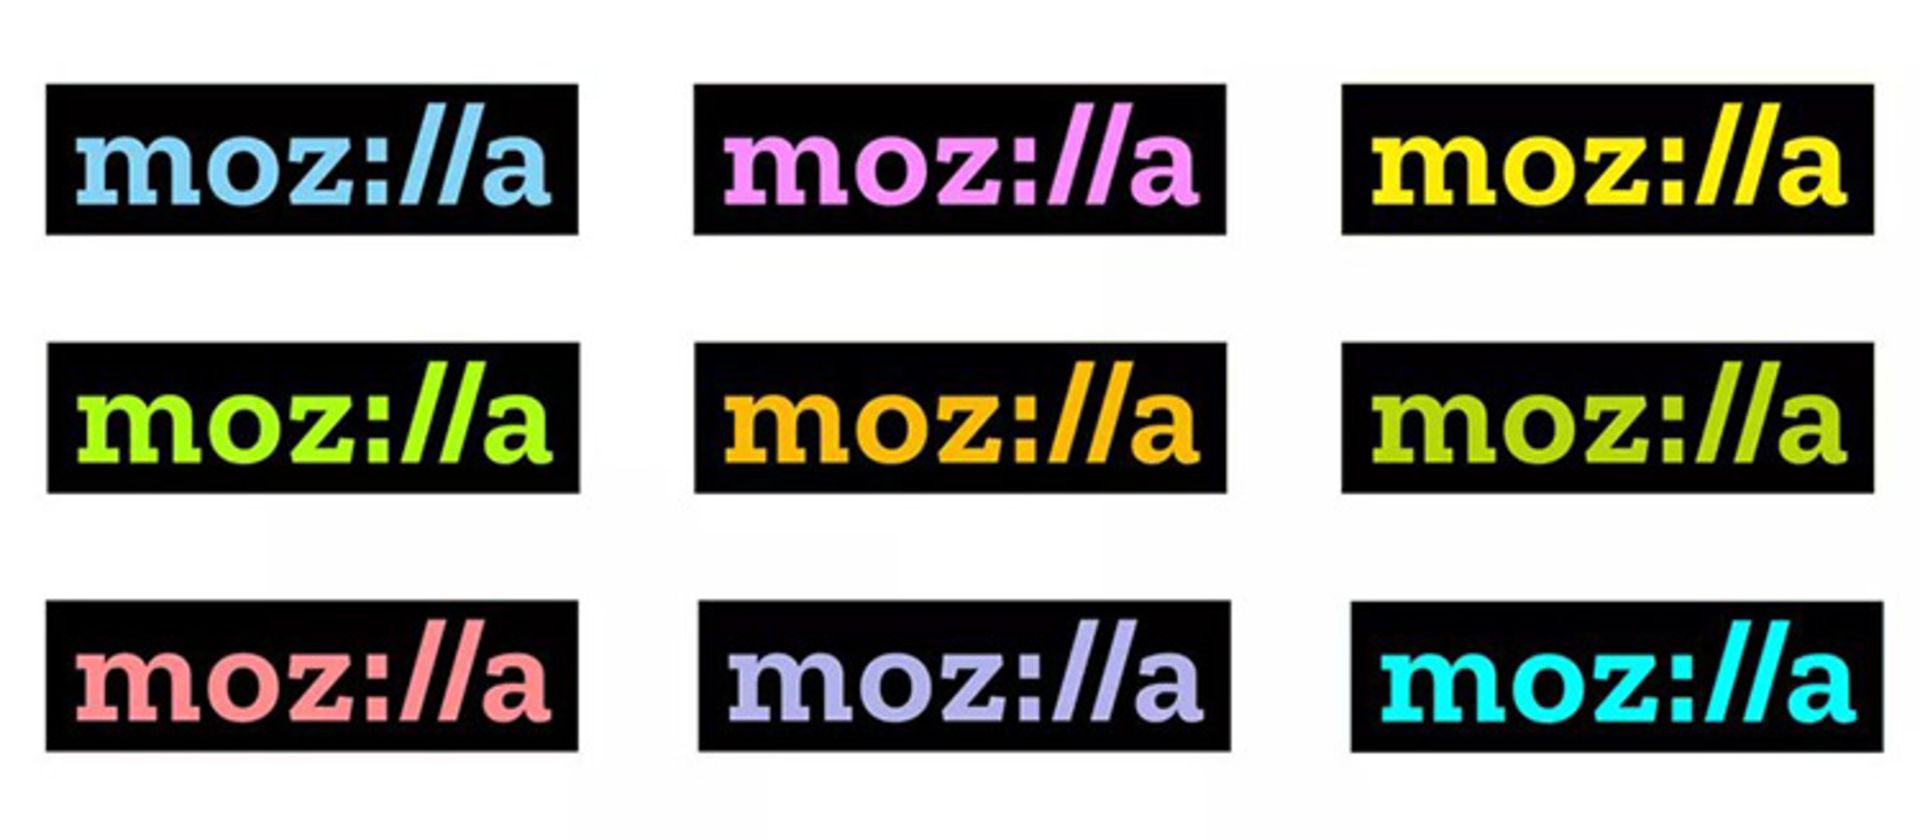 mozilla-open-sourced-logo